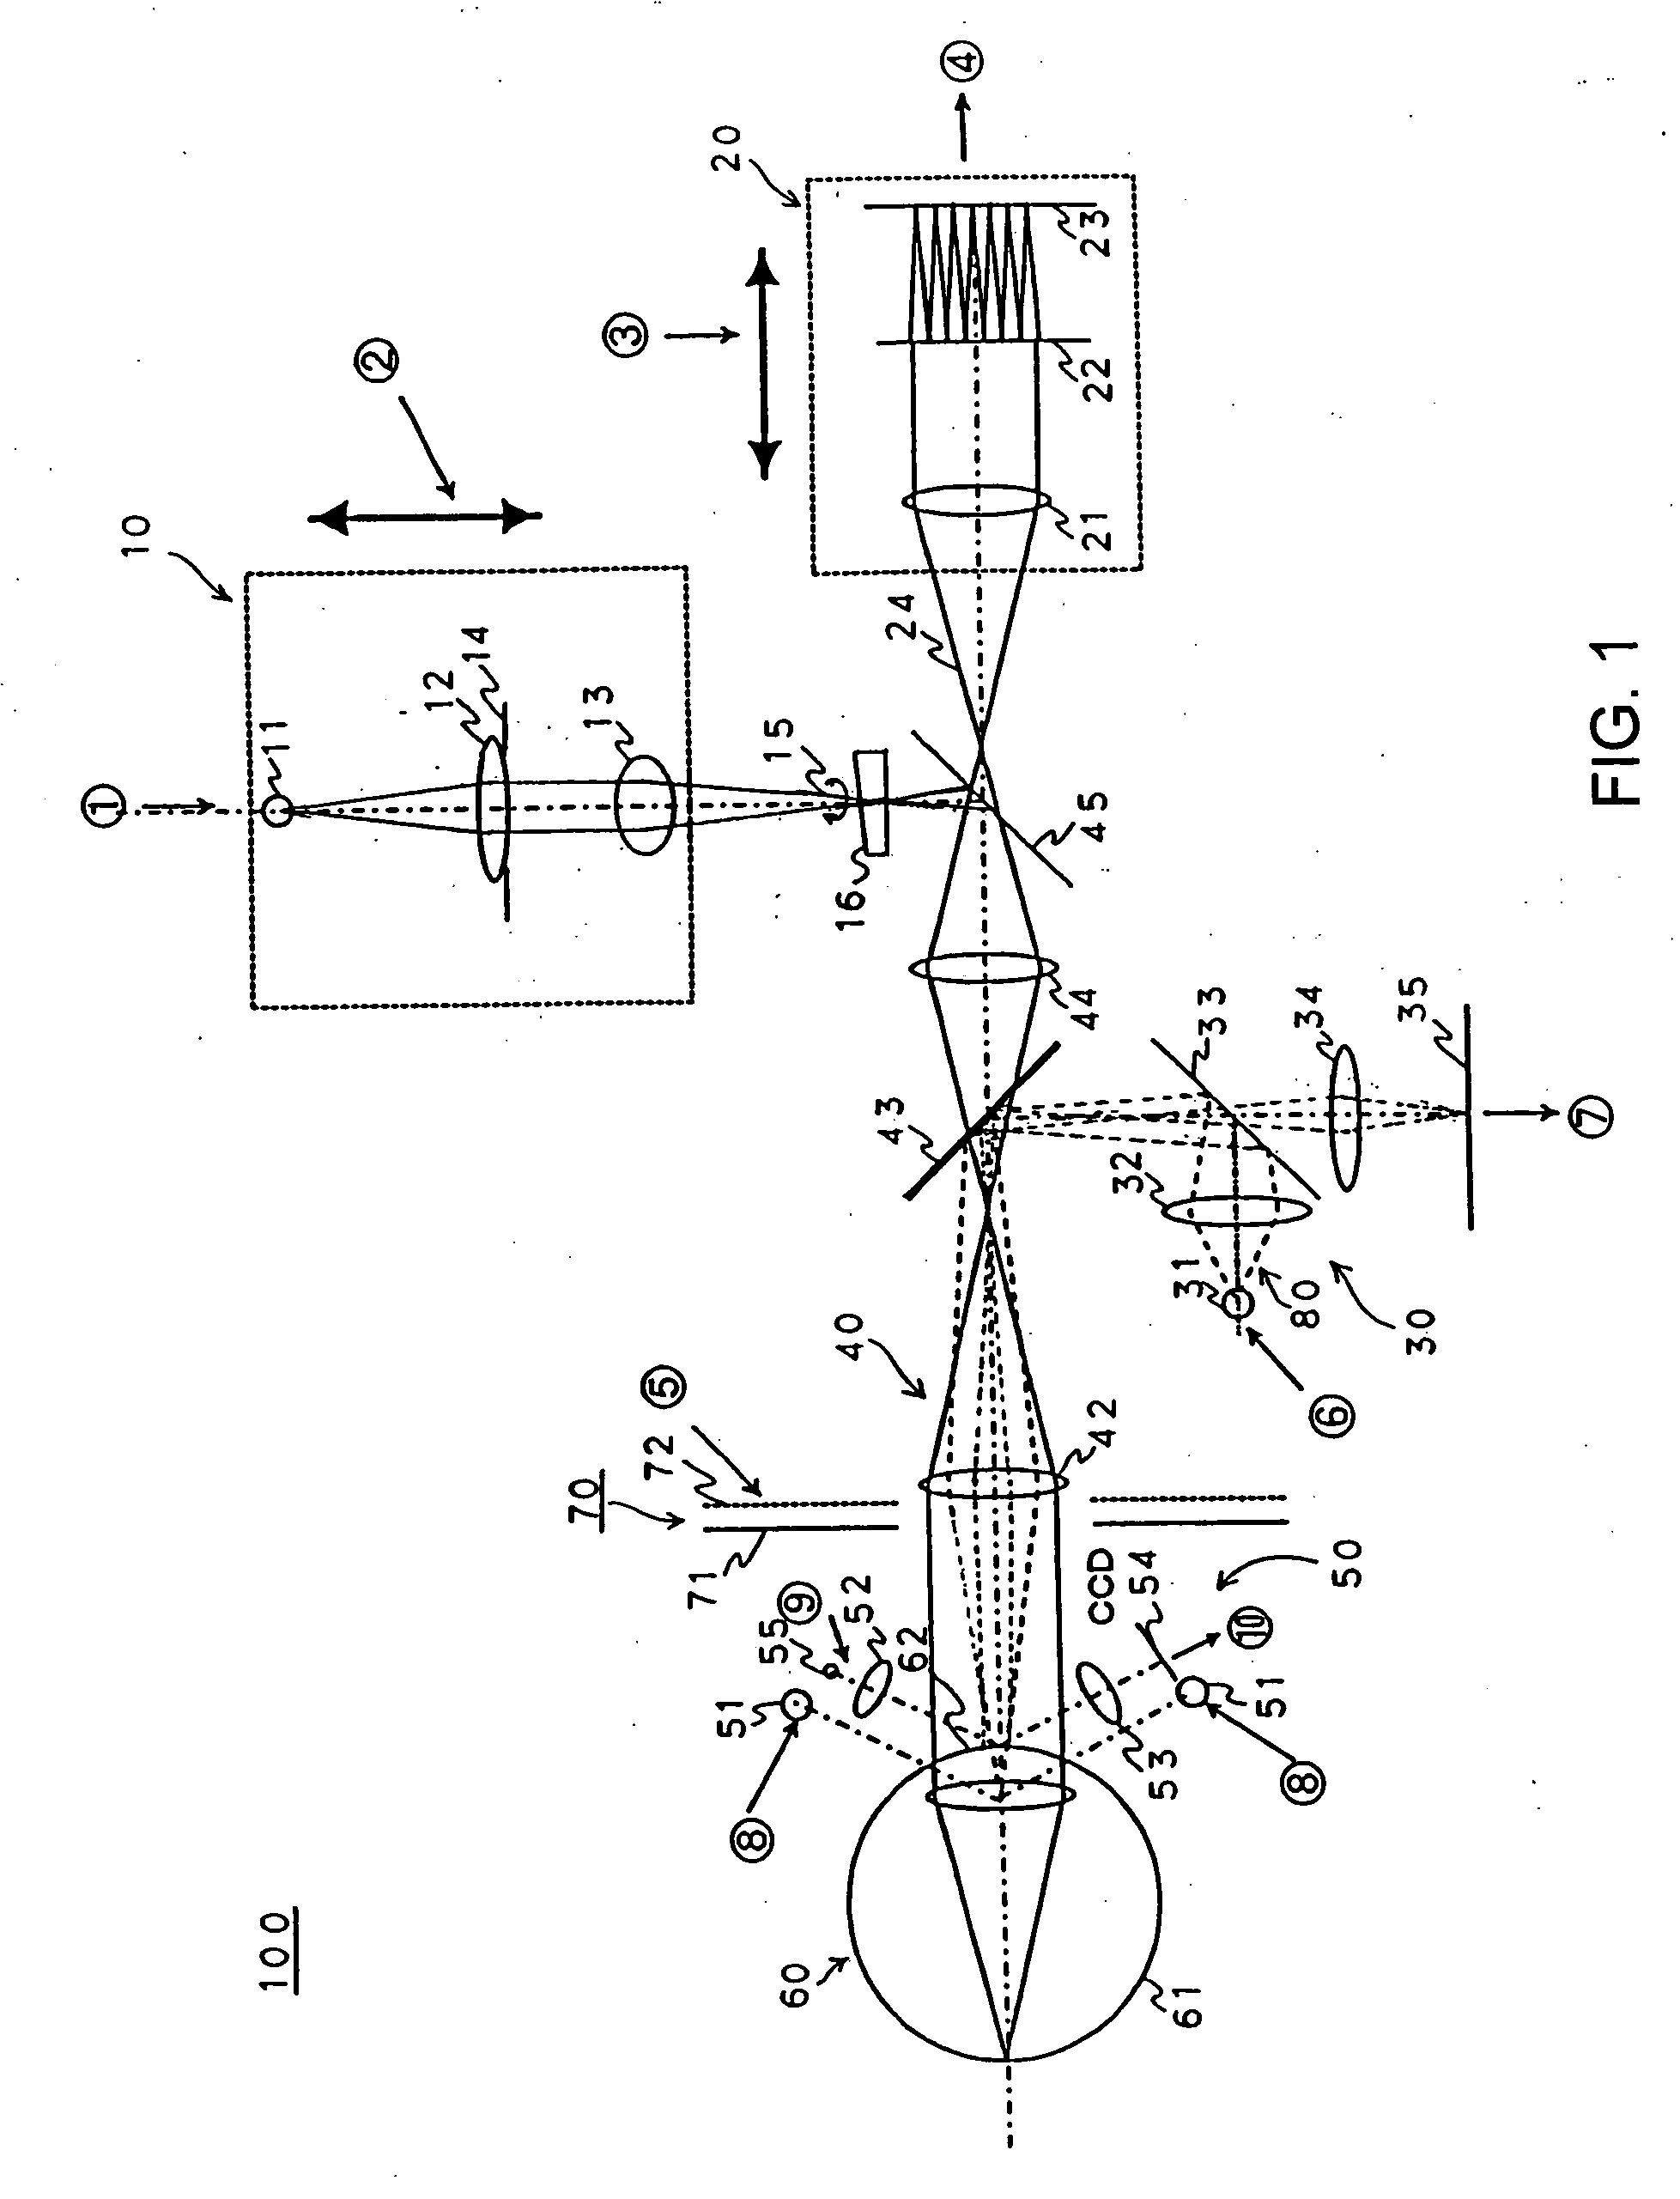 Opthalmological apparatus